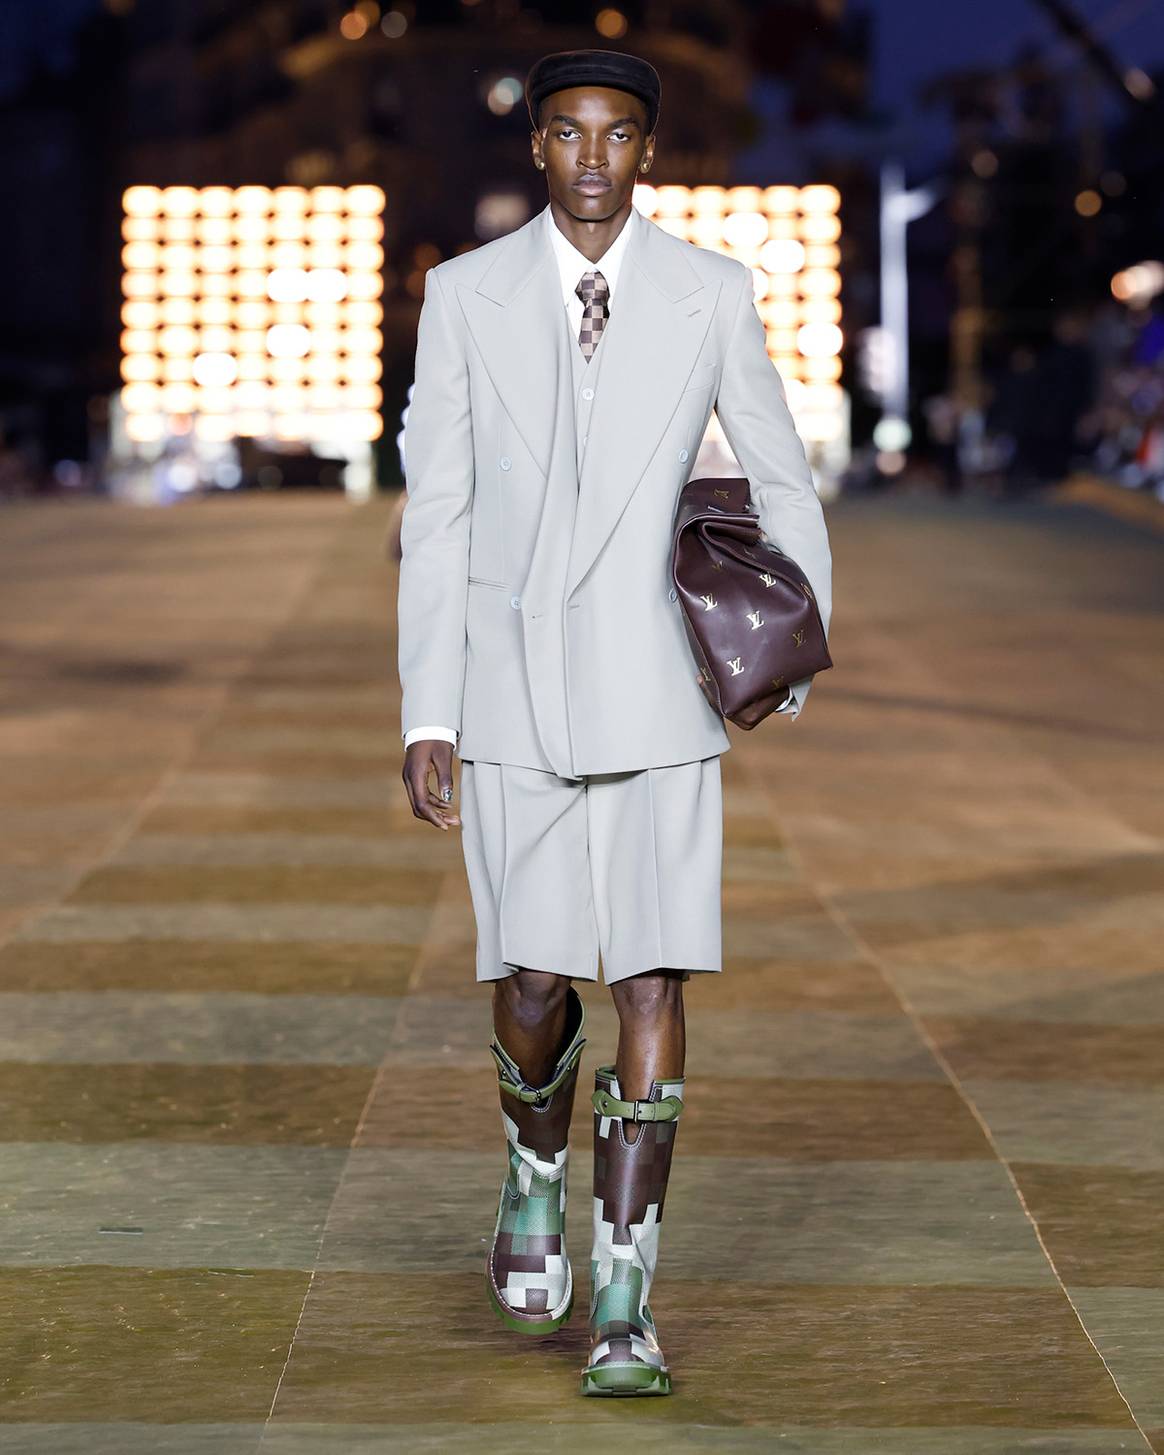 Créditos: Photo Credits: Louis Vuitton, colección masculina para la temporada Primavera/Verano SS24, colección de debut de Pharrell Williams como director creativo de la línea masculina de la casa de modas francesa. Louis Vuitton, imagen de cortesía.